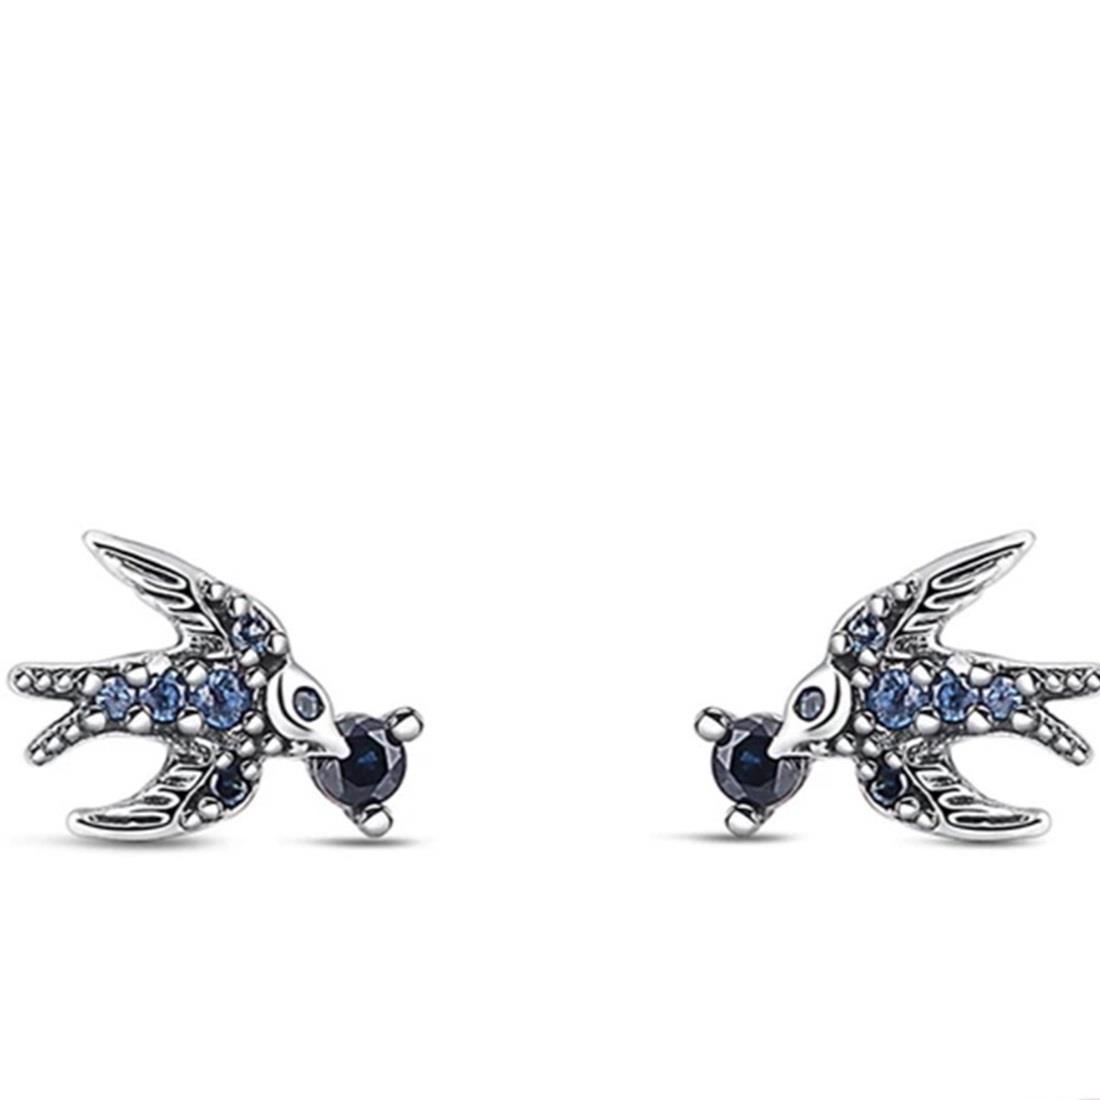 Swallow lobe earrings in silver with blue stones - PANDORA